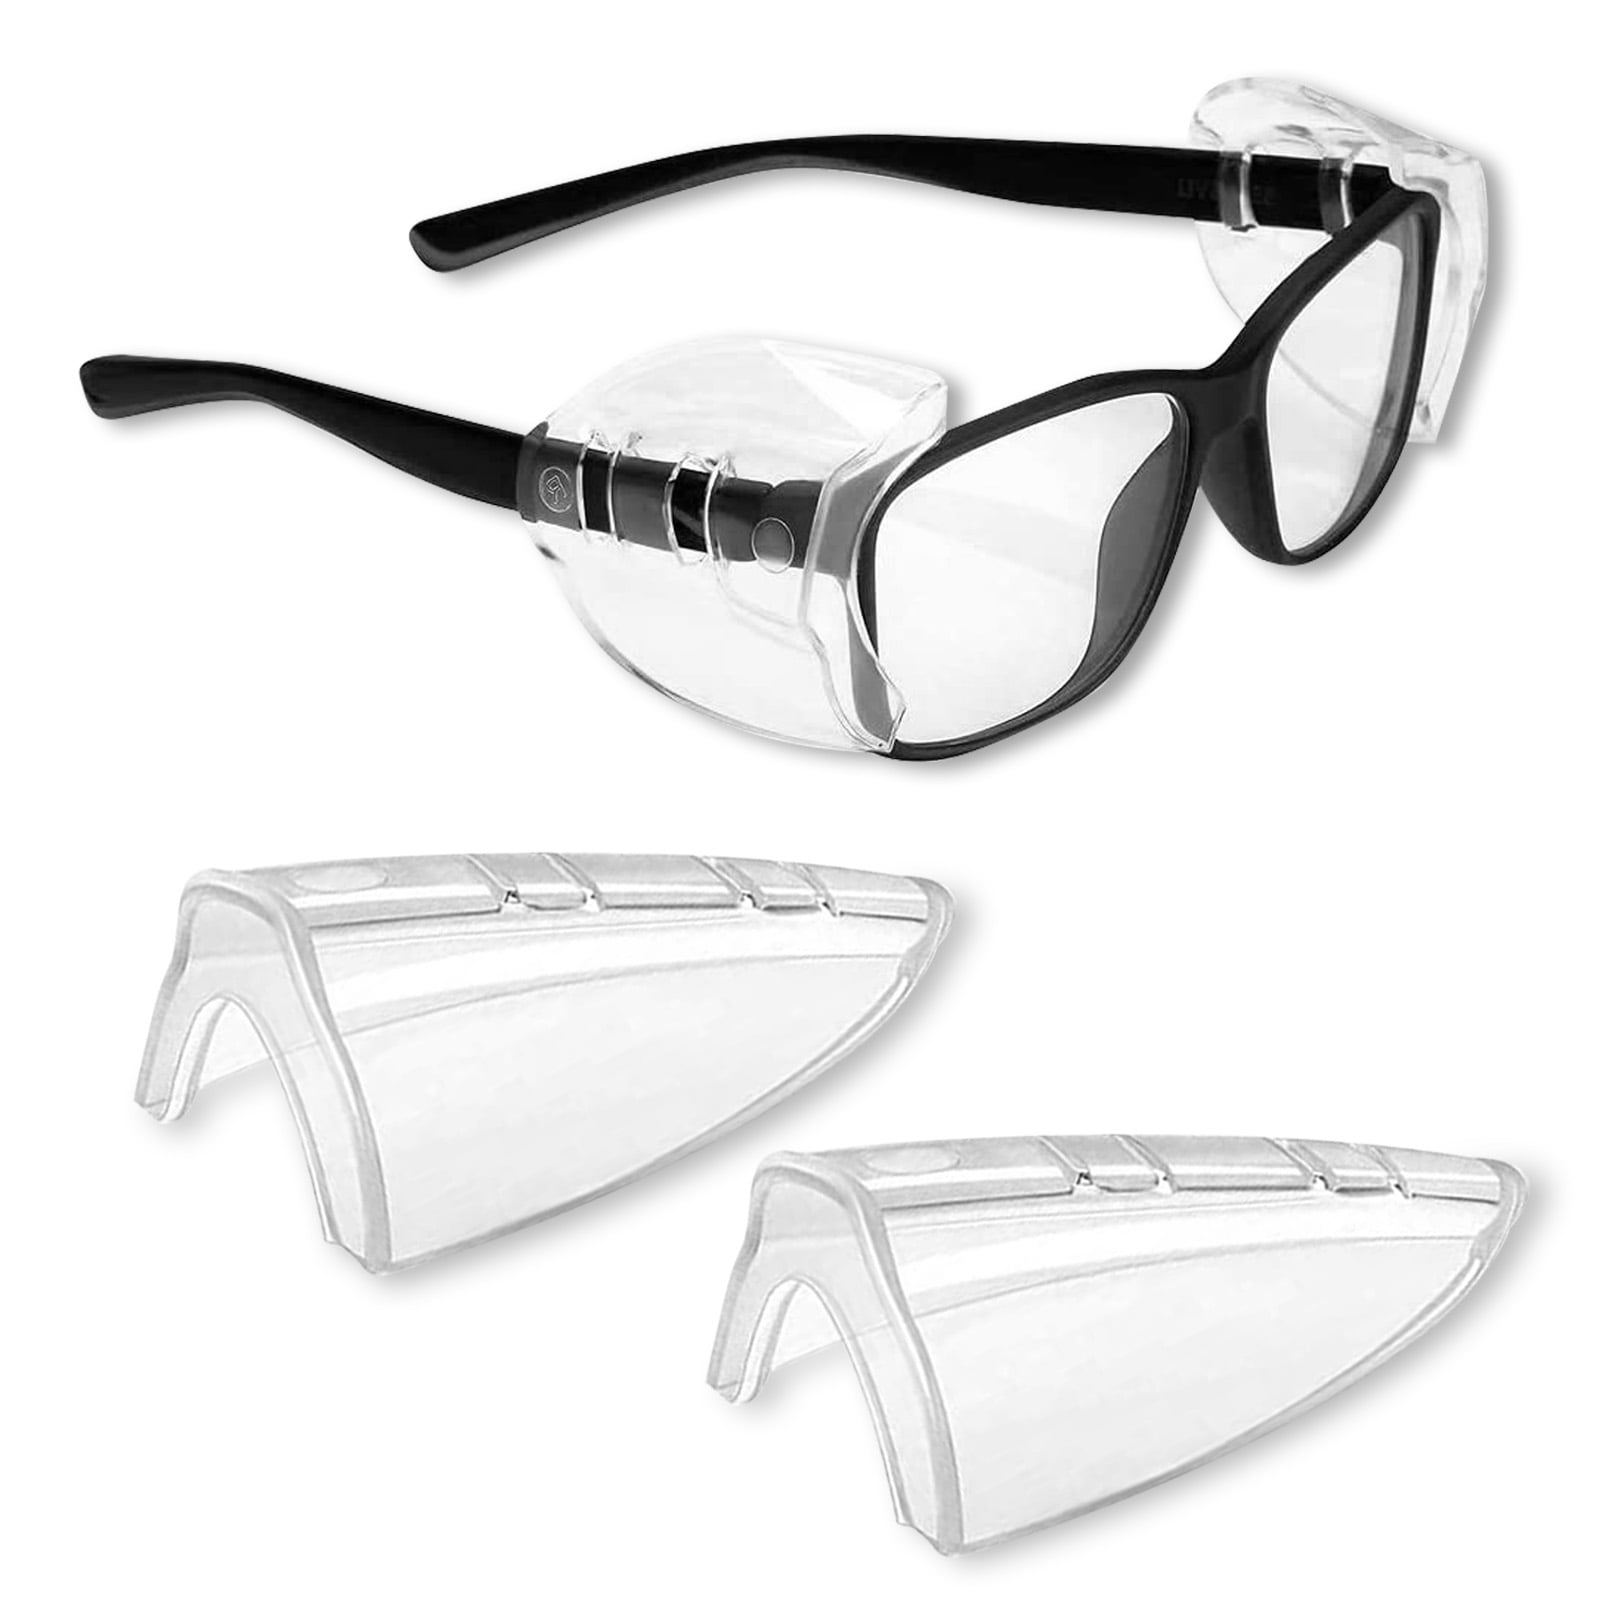 Miraclery 6 Pairs Safety Eye Glasses Side Shields Slip On Clear Side Shield for Safety Glasses S to M Eyeglasses 